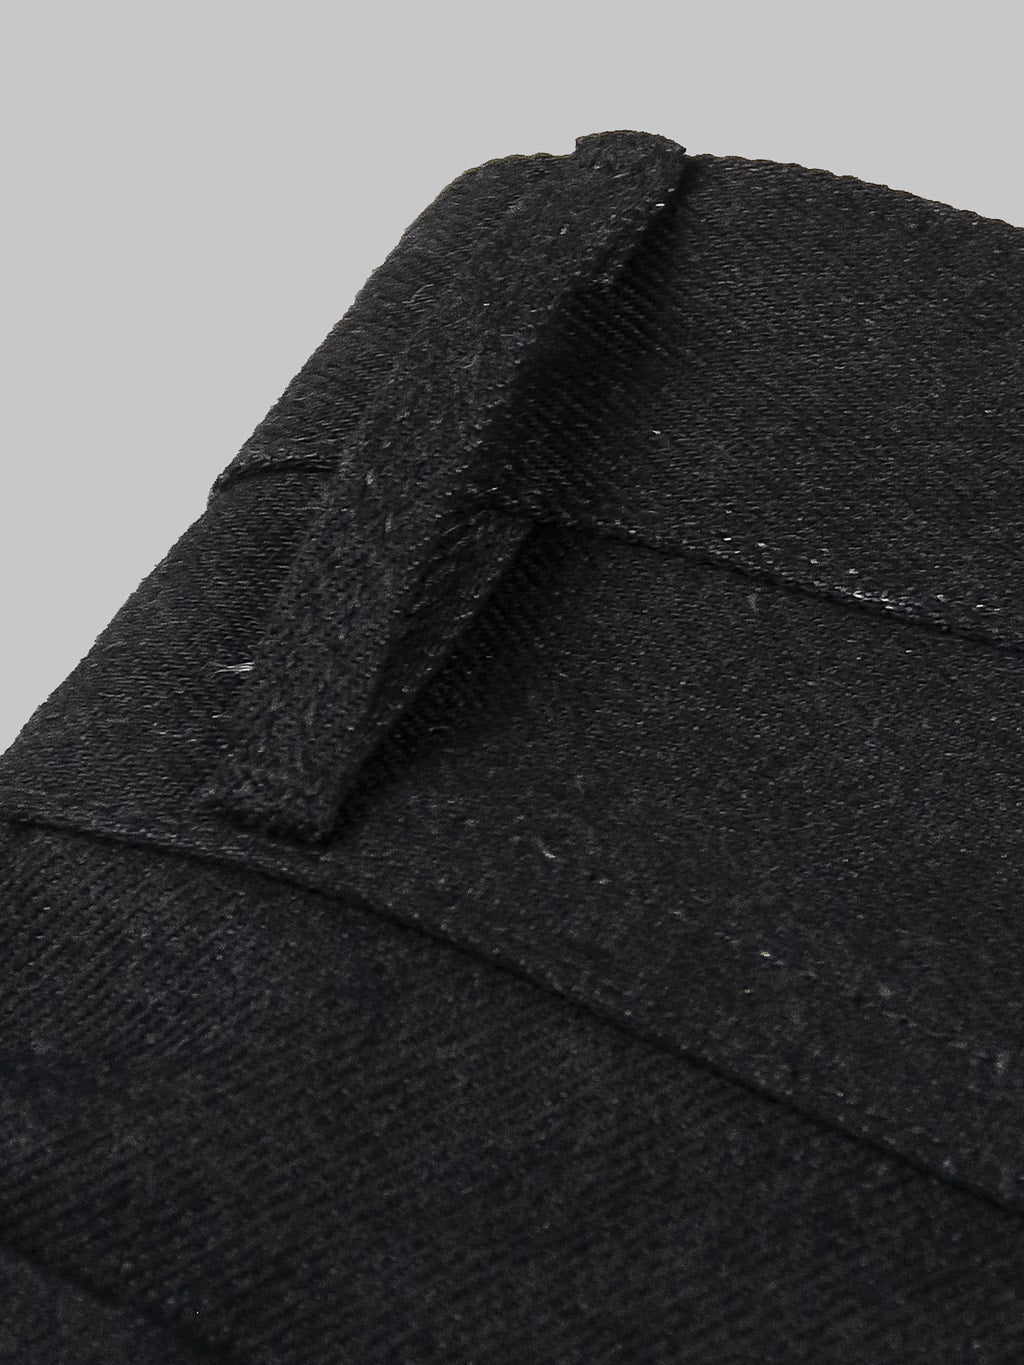 Freenote Cloth Rios Black Grey Japanese Denim Slim Straight Jeans fabric closeup